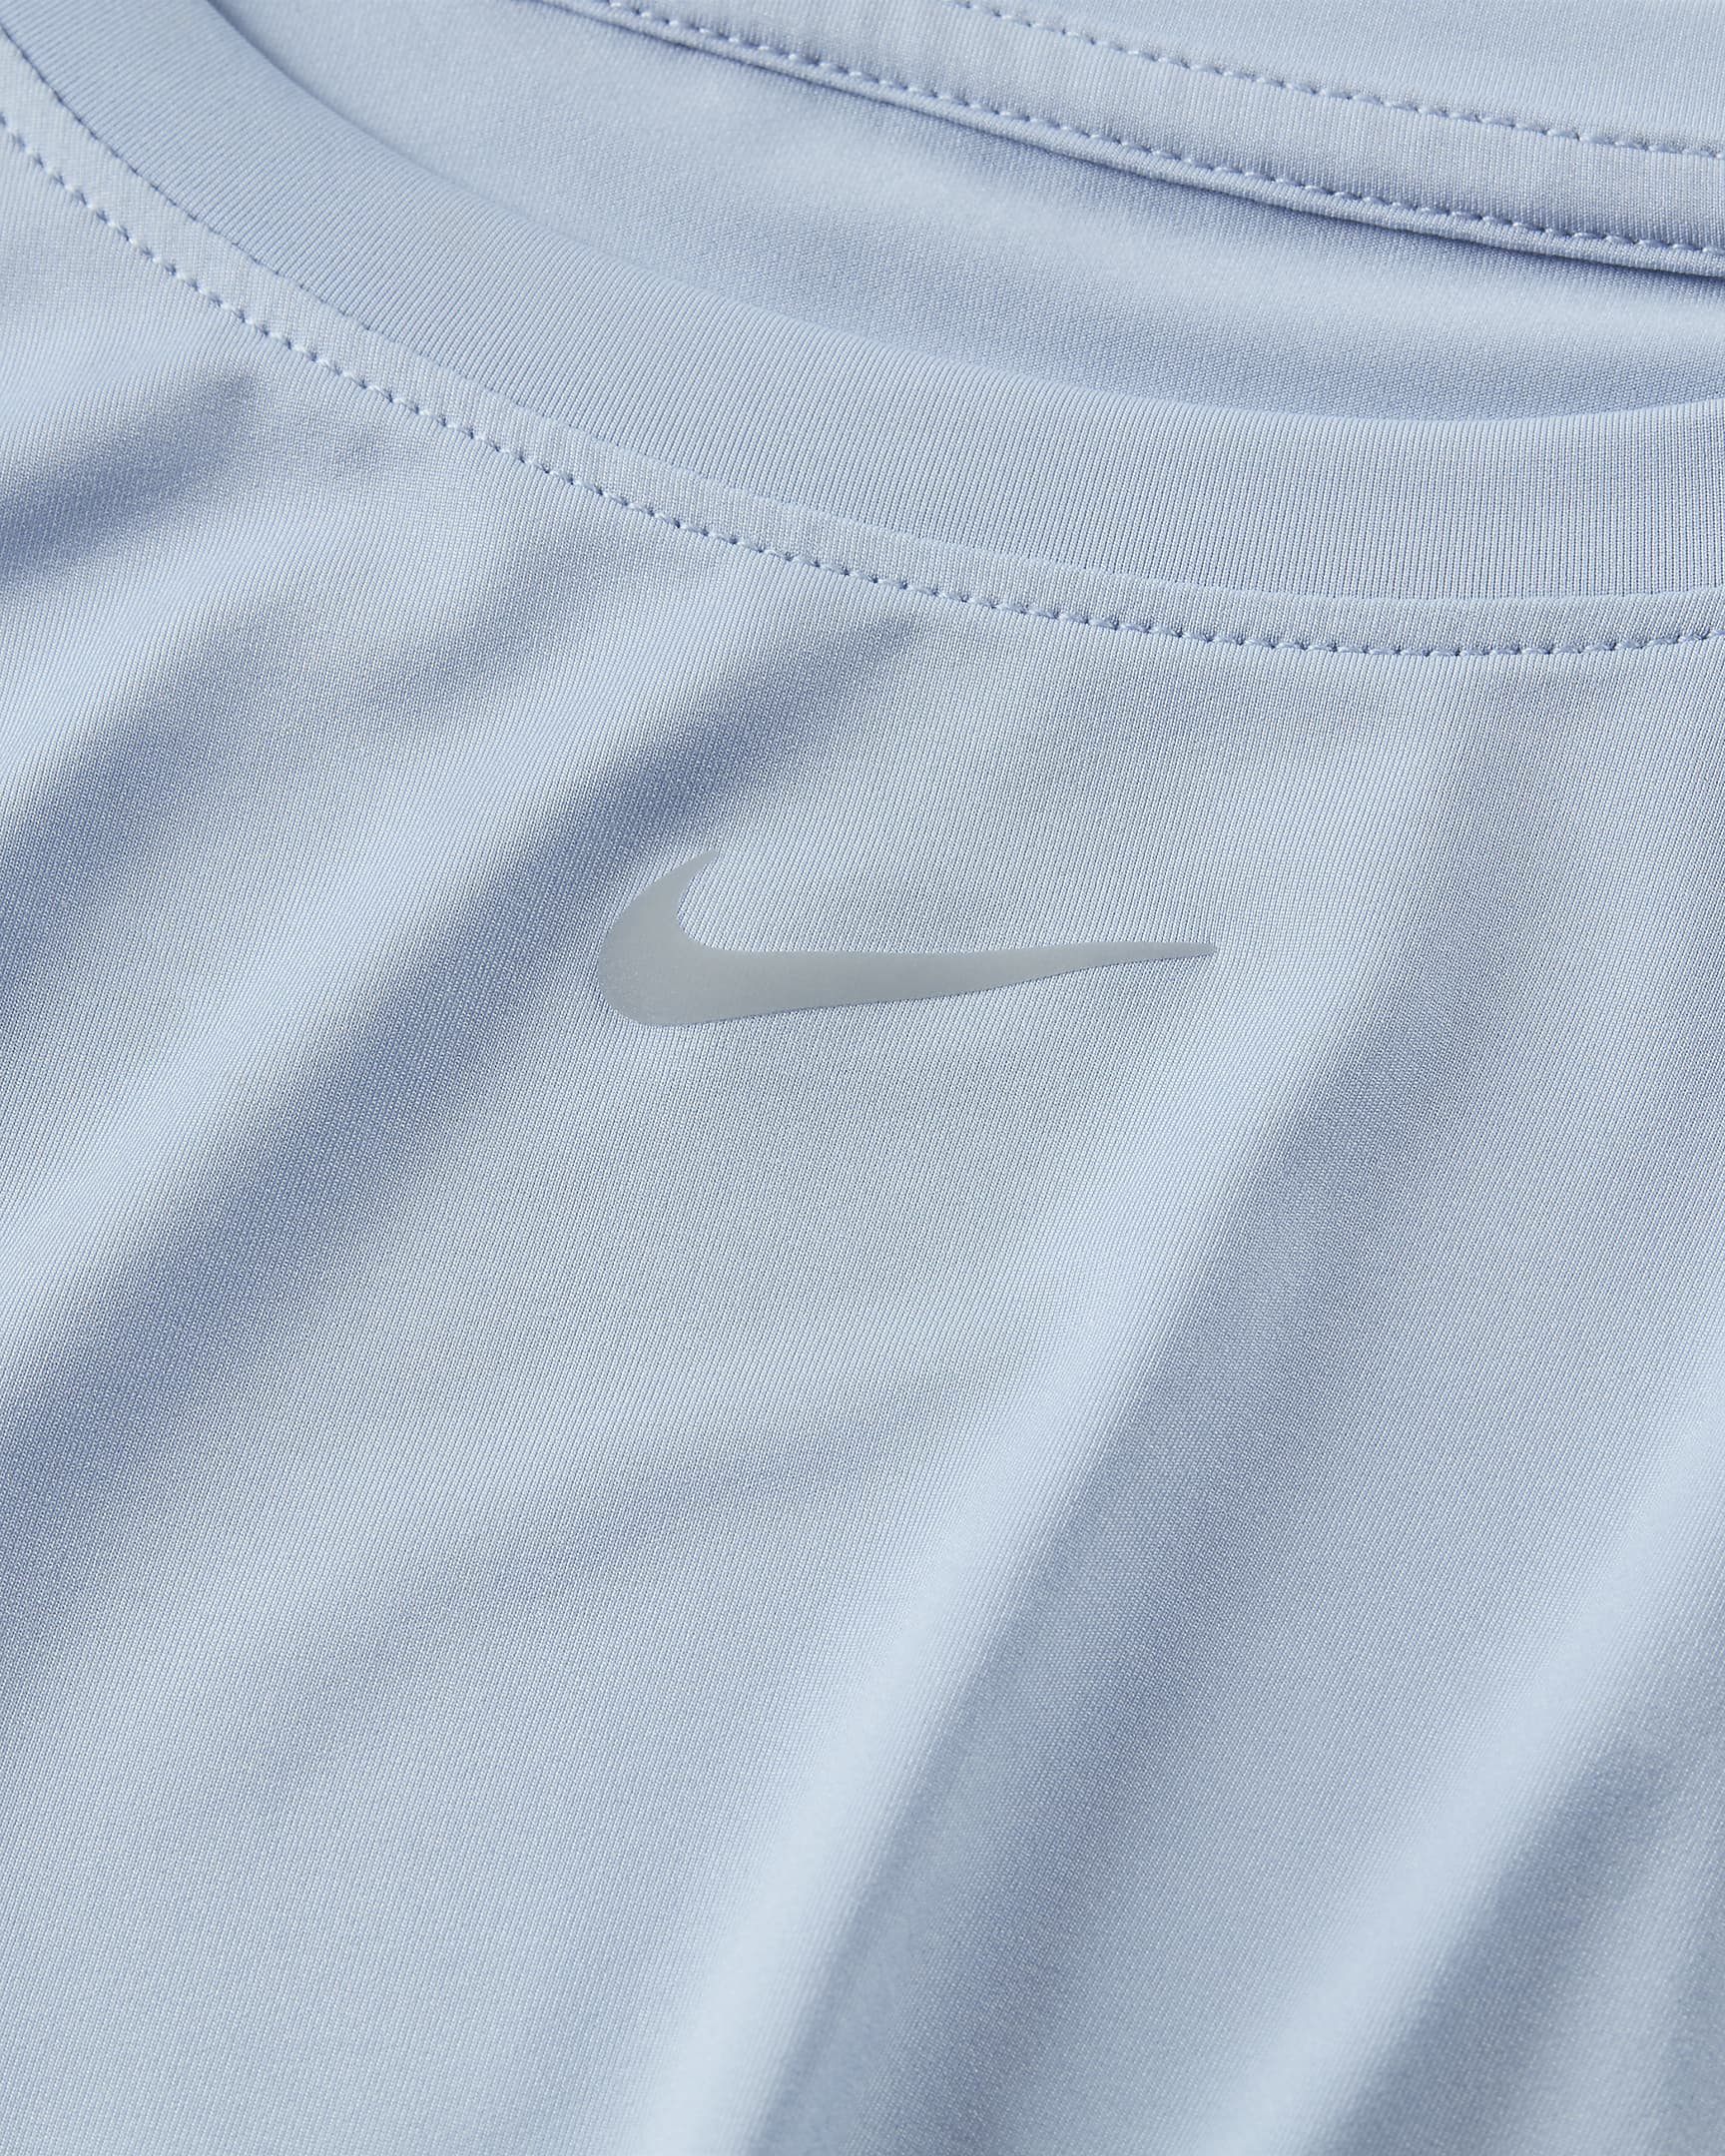 Nike One Classic Women's Dri-FIT Short-Sleeve Top - Light Armoury Blue/Black